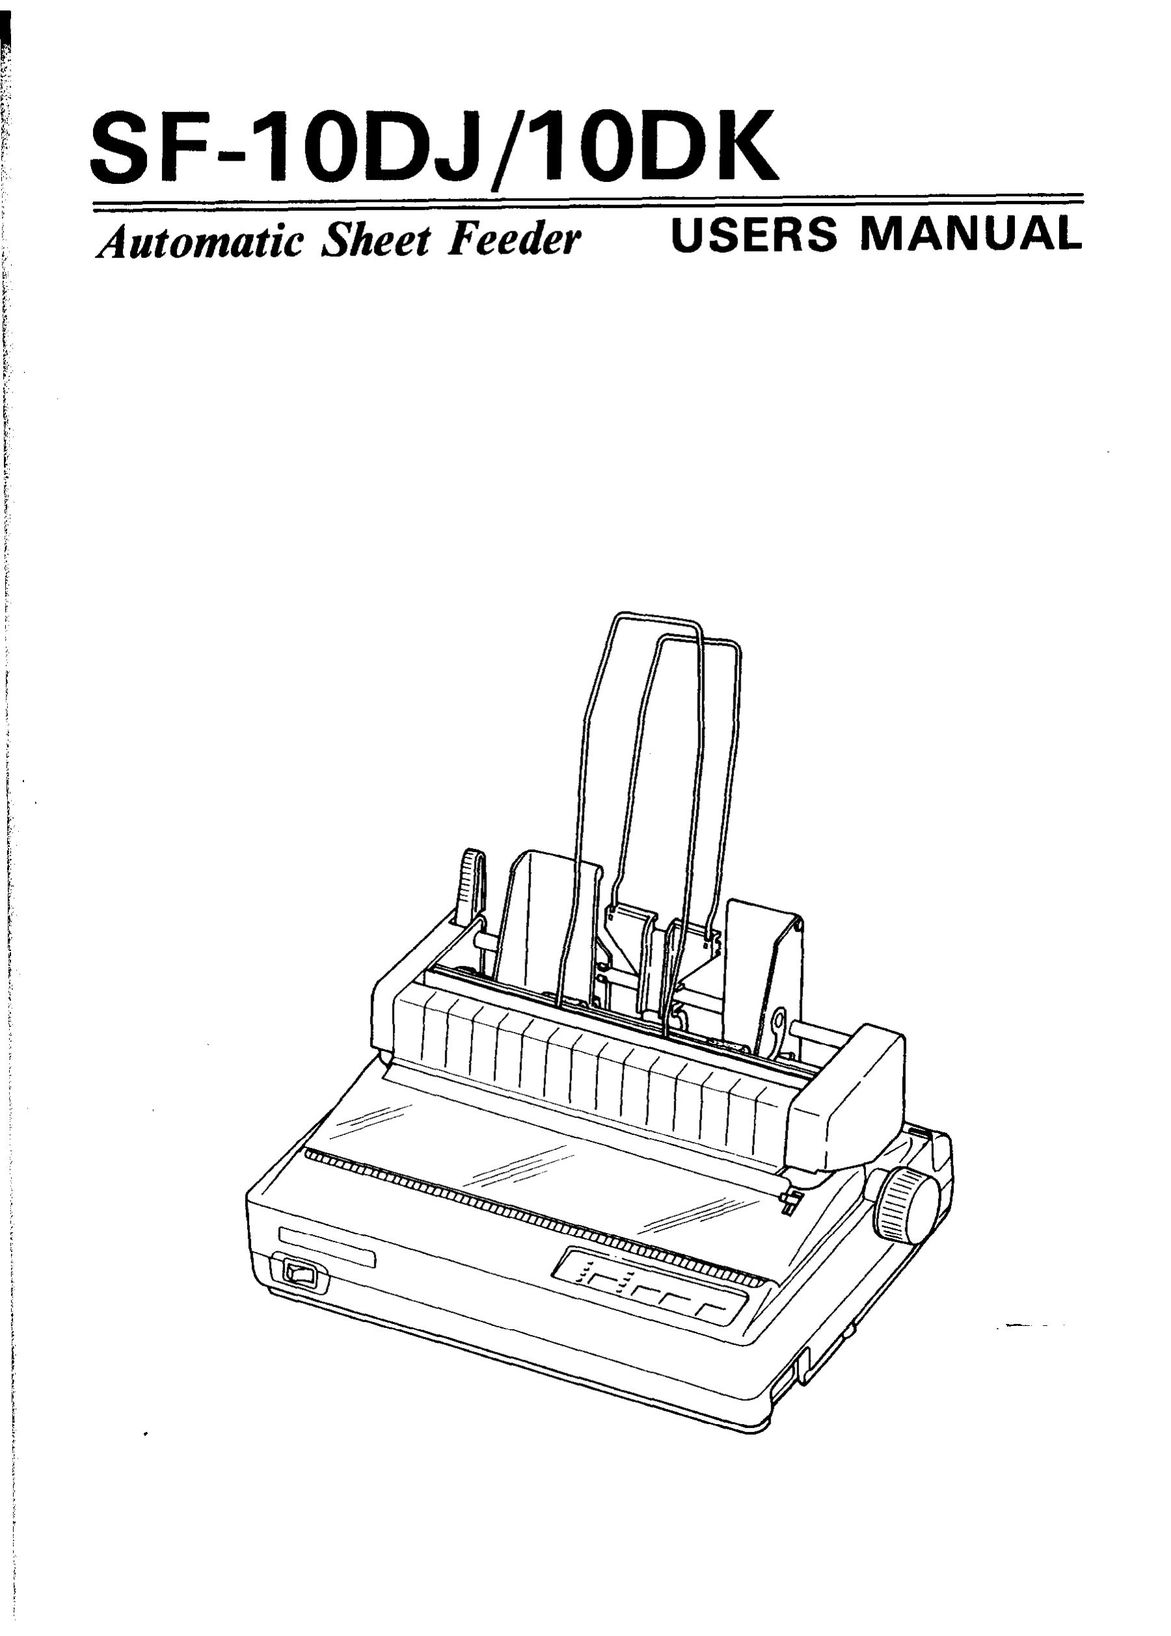 Star Micronics 10DK Printer User Manual